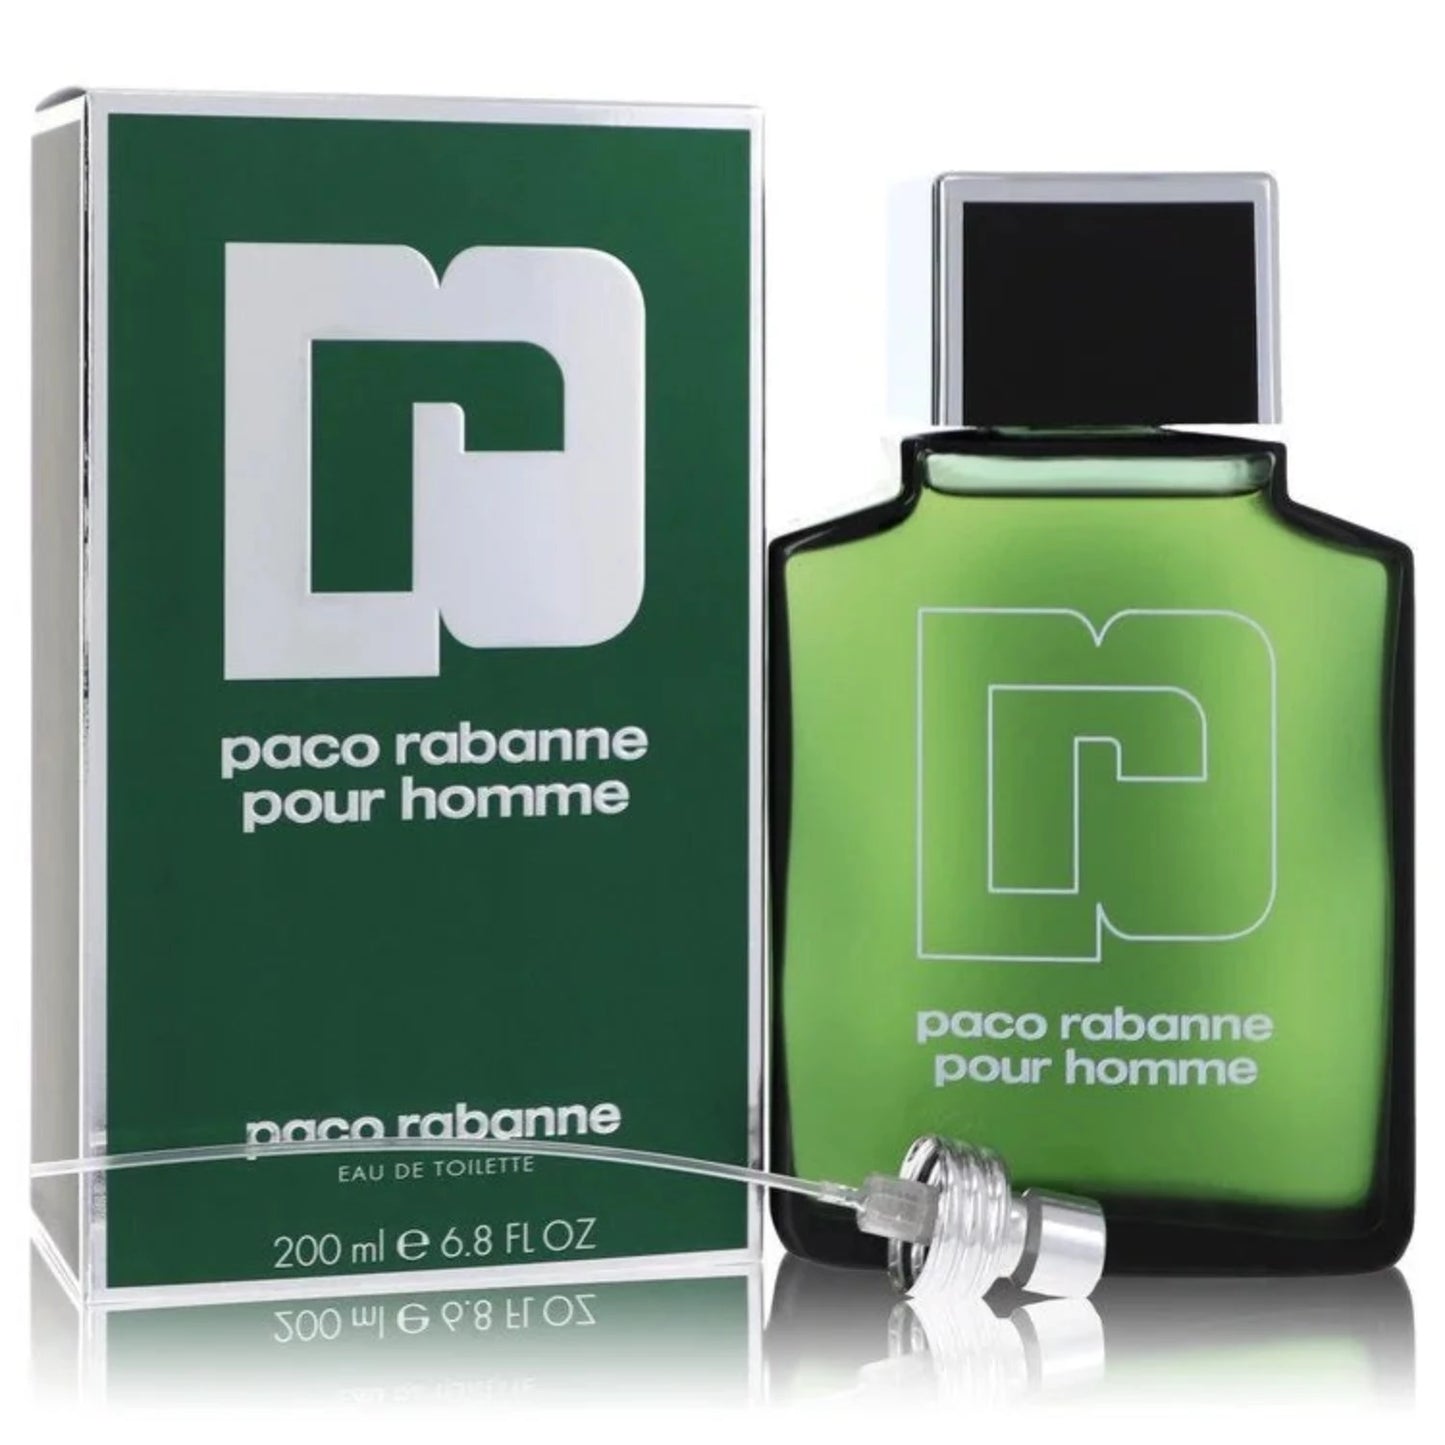 Paco Rabanne Eau De Toilette Splash & Spray By Paco Rabanne for men